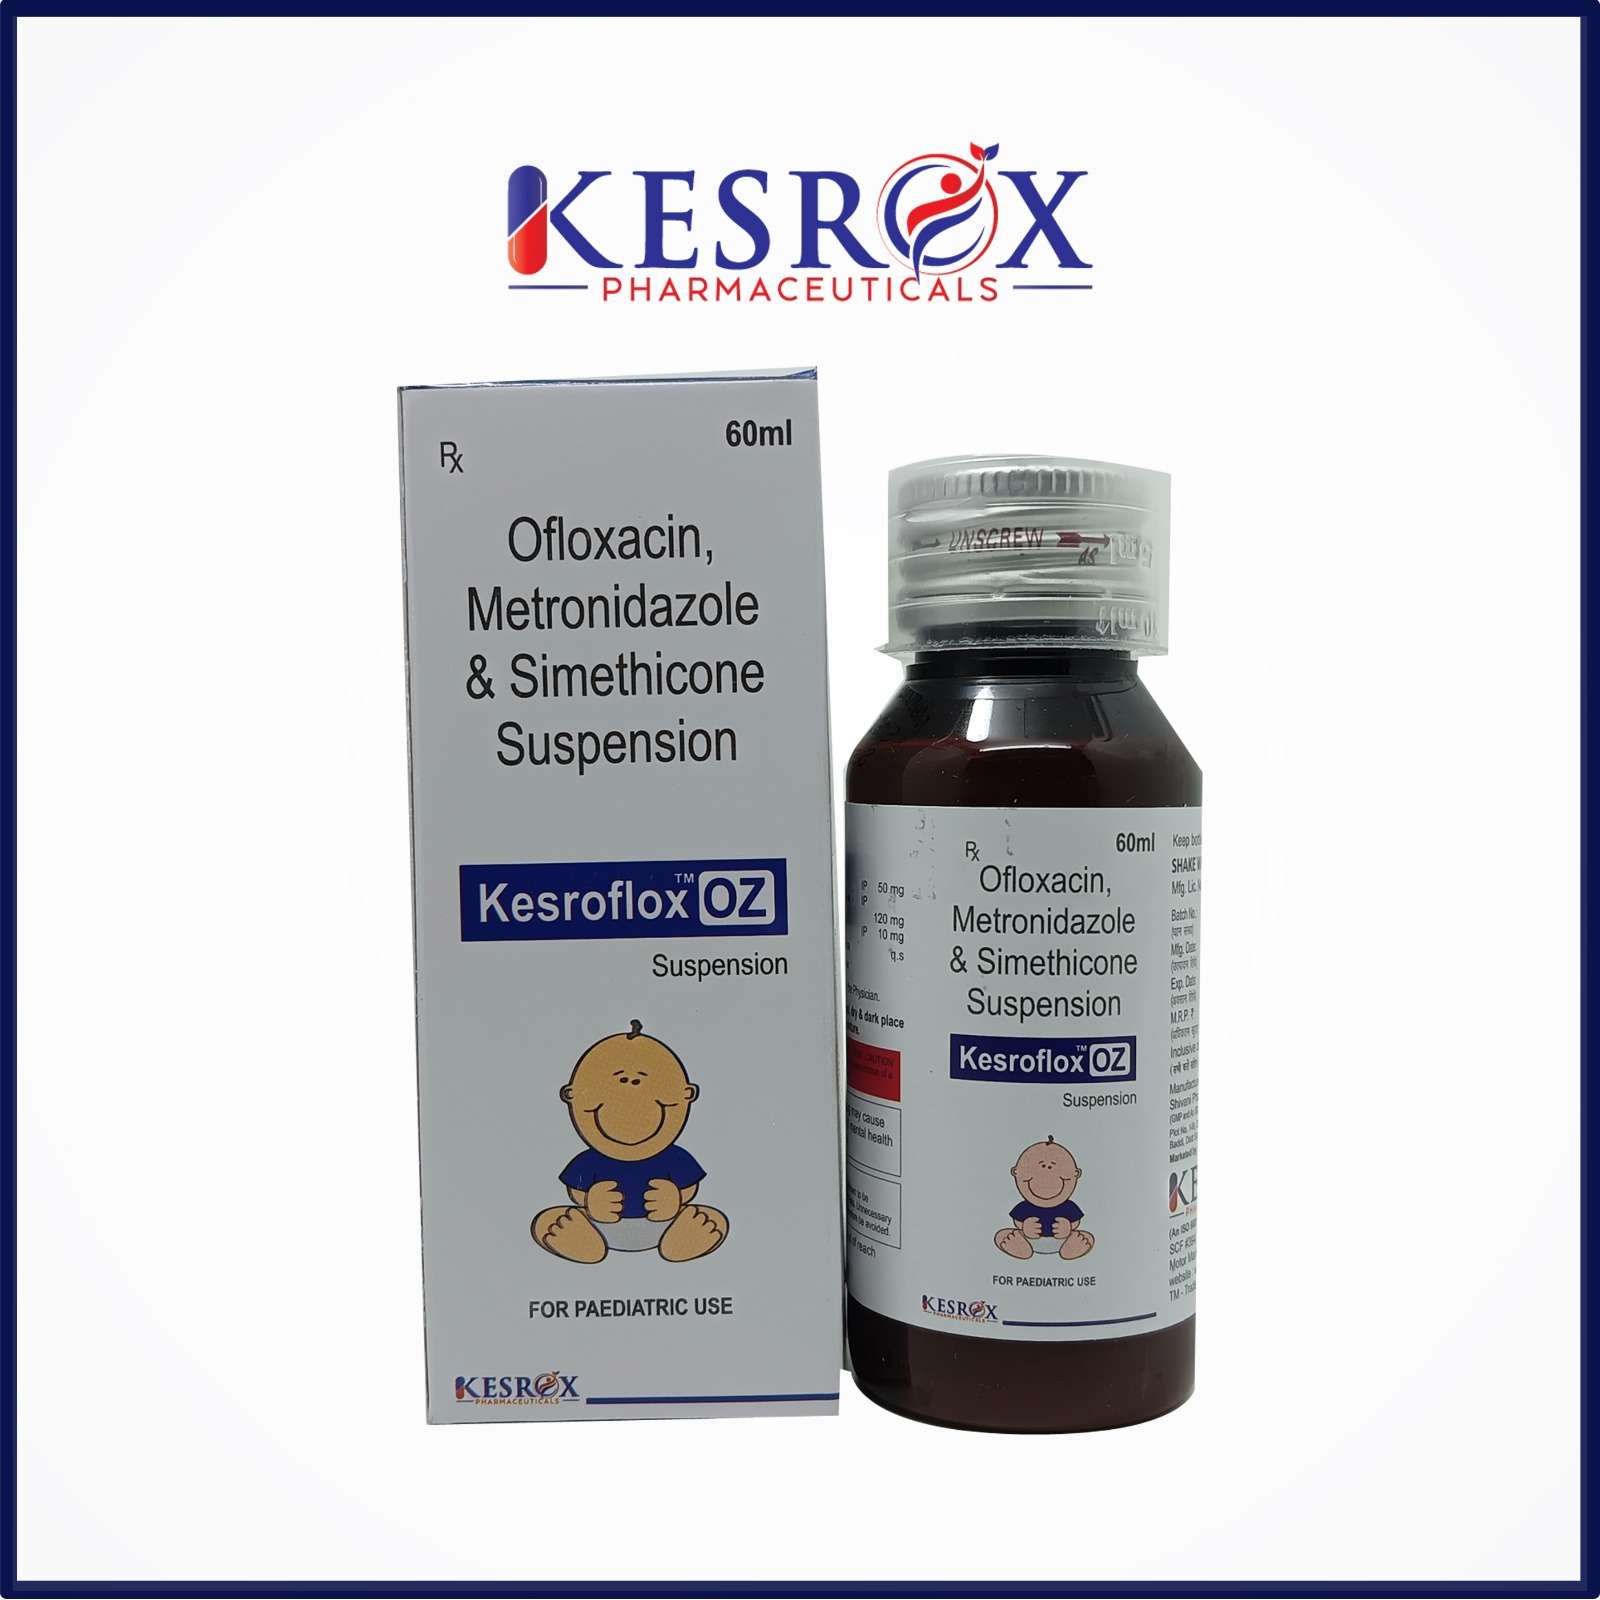 ofloxacin 50 mg , metronidazole 120 mg & simethicone 10 mg  suspesion